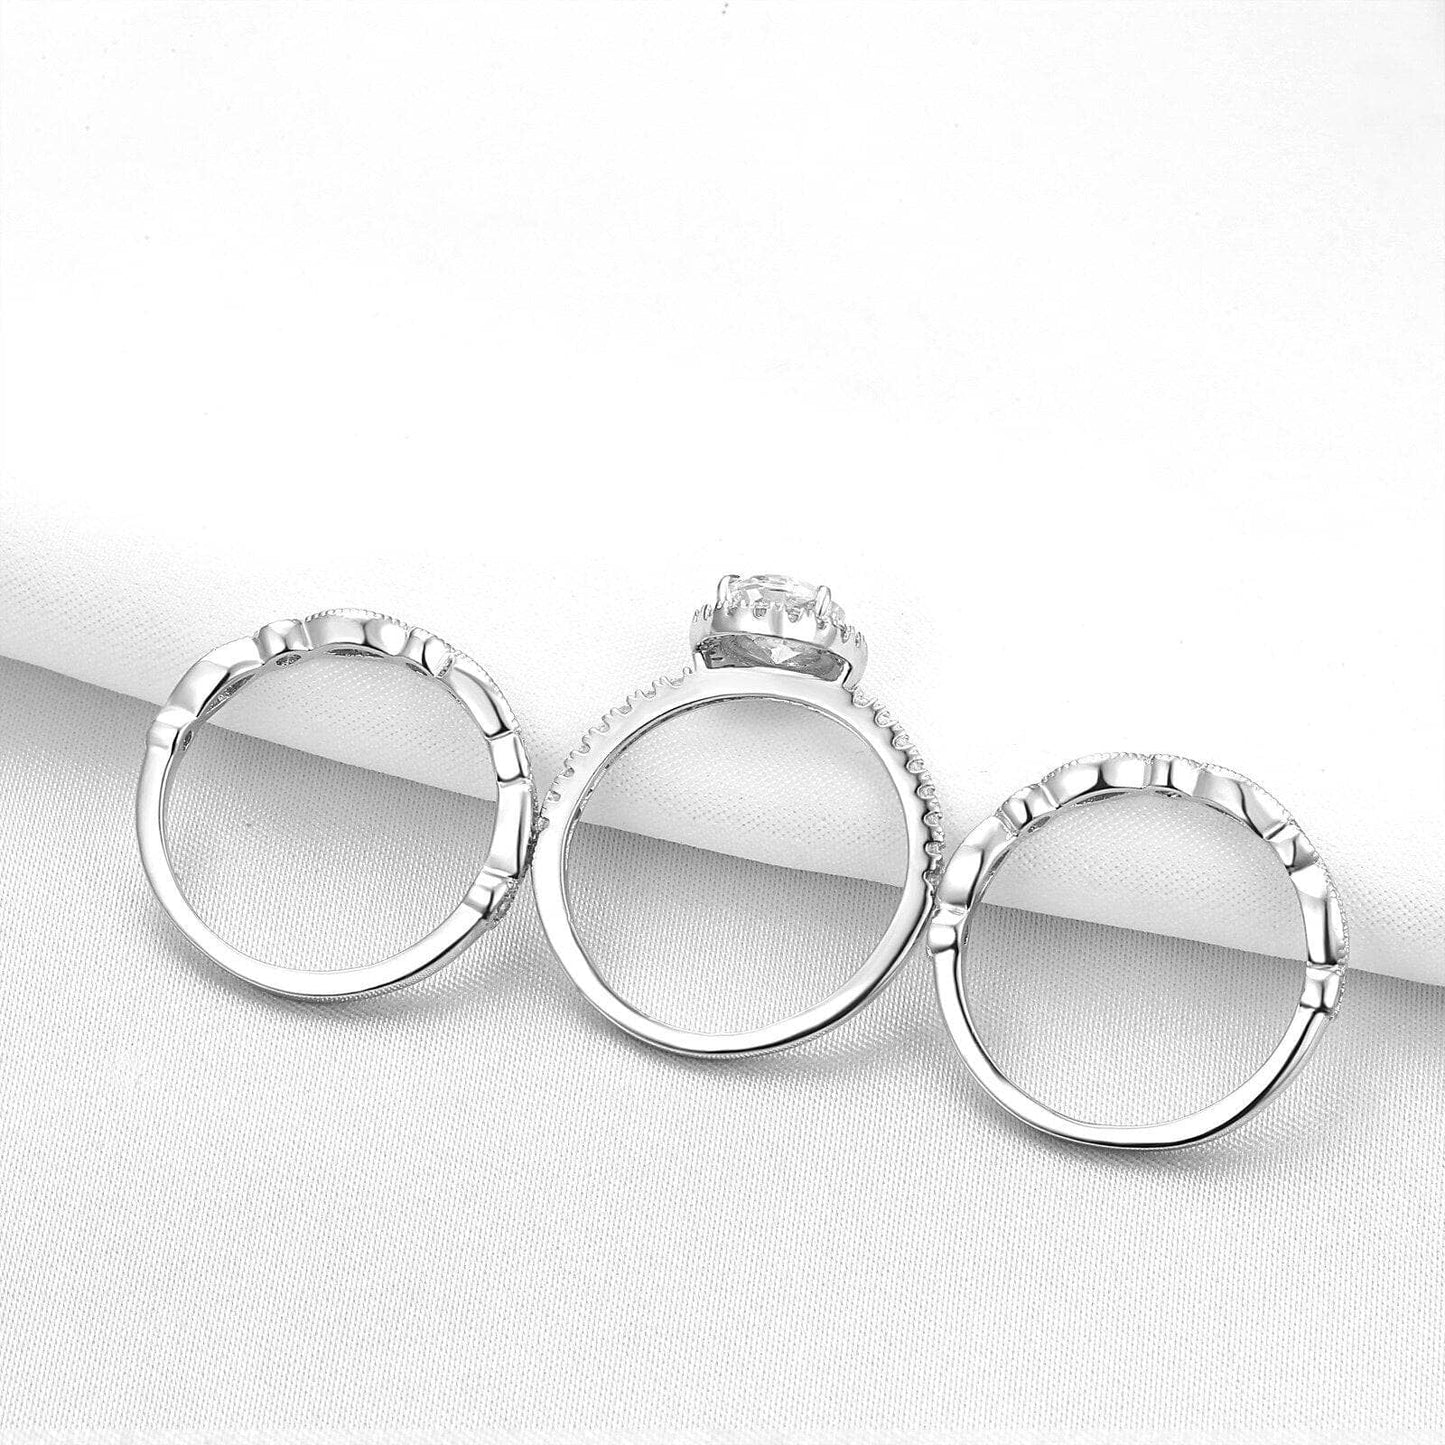 Flash Sale 1.8ct Oval Cut Created Diamond Ring-Black Diamonds New York